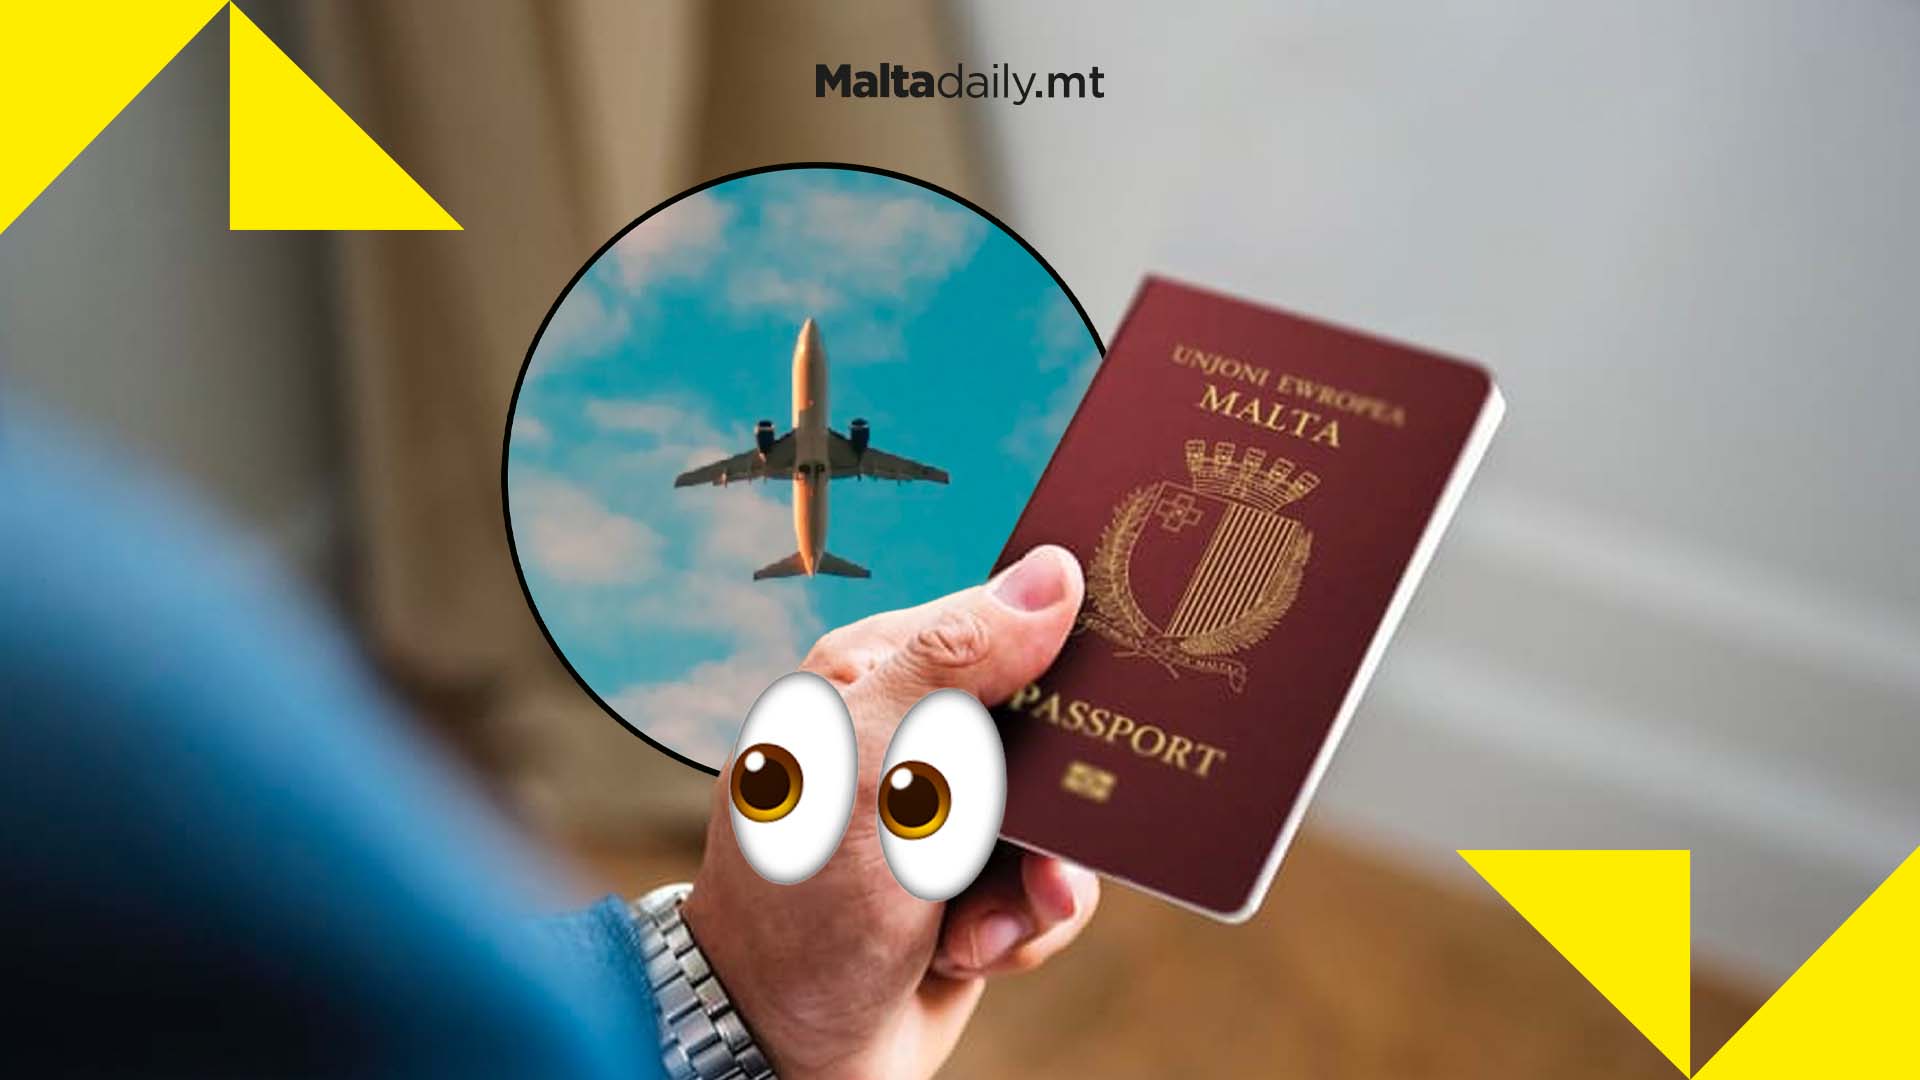 8000 applications for passports in Malta in June 2022 alone